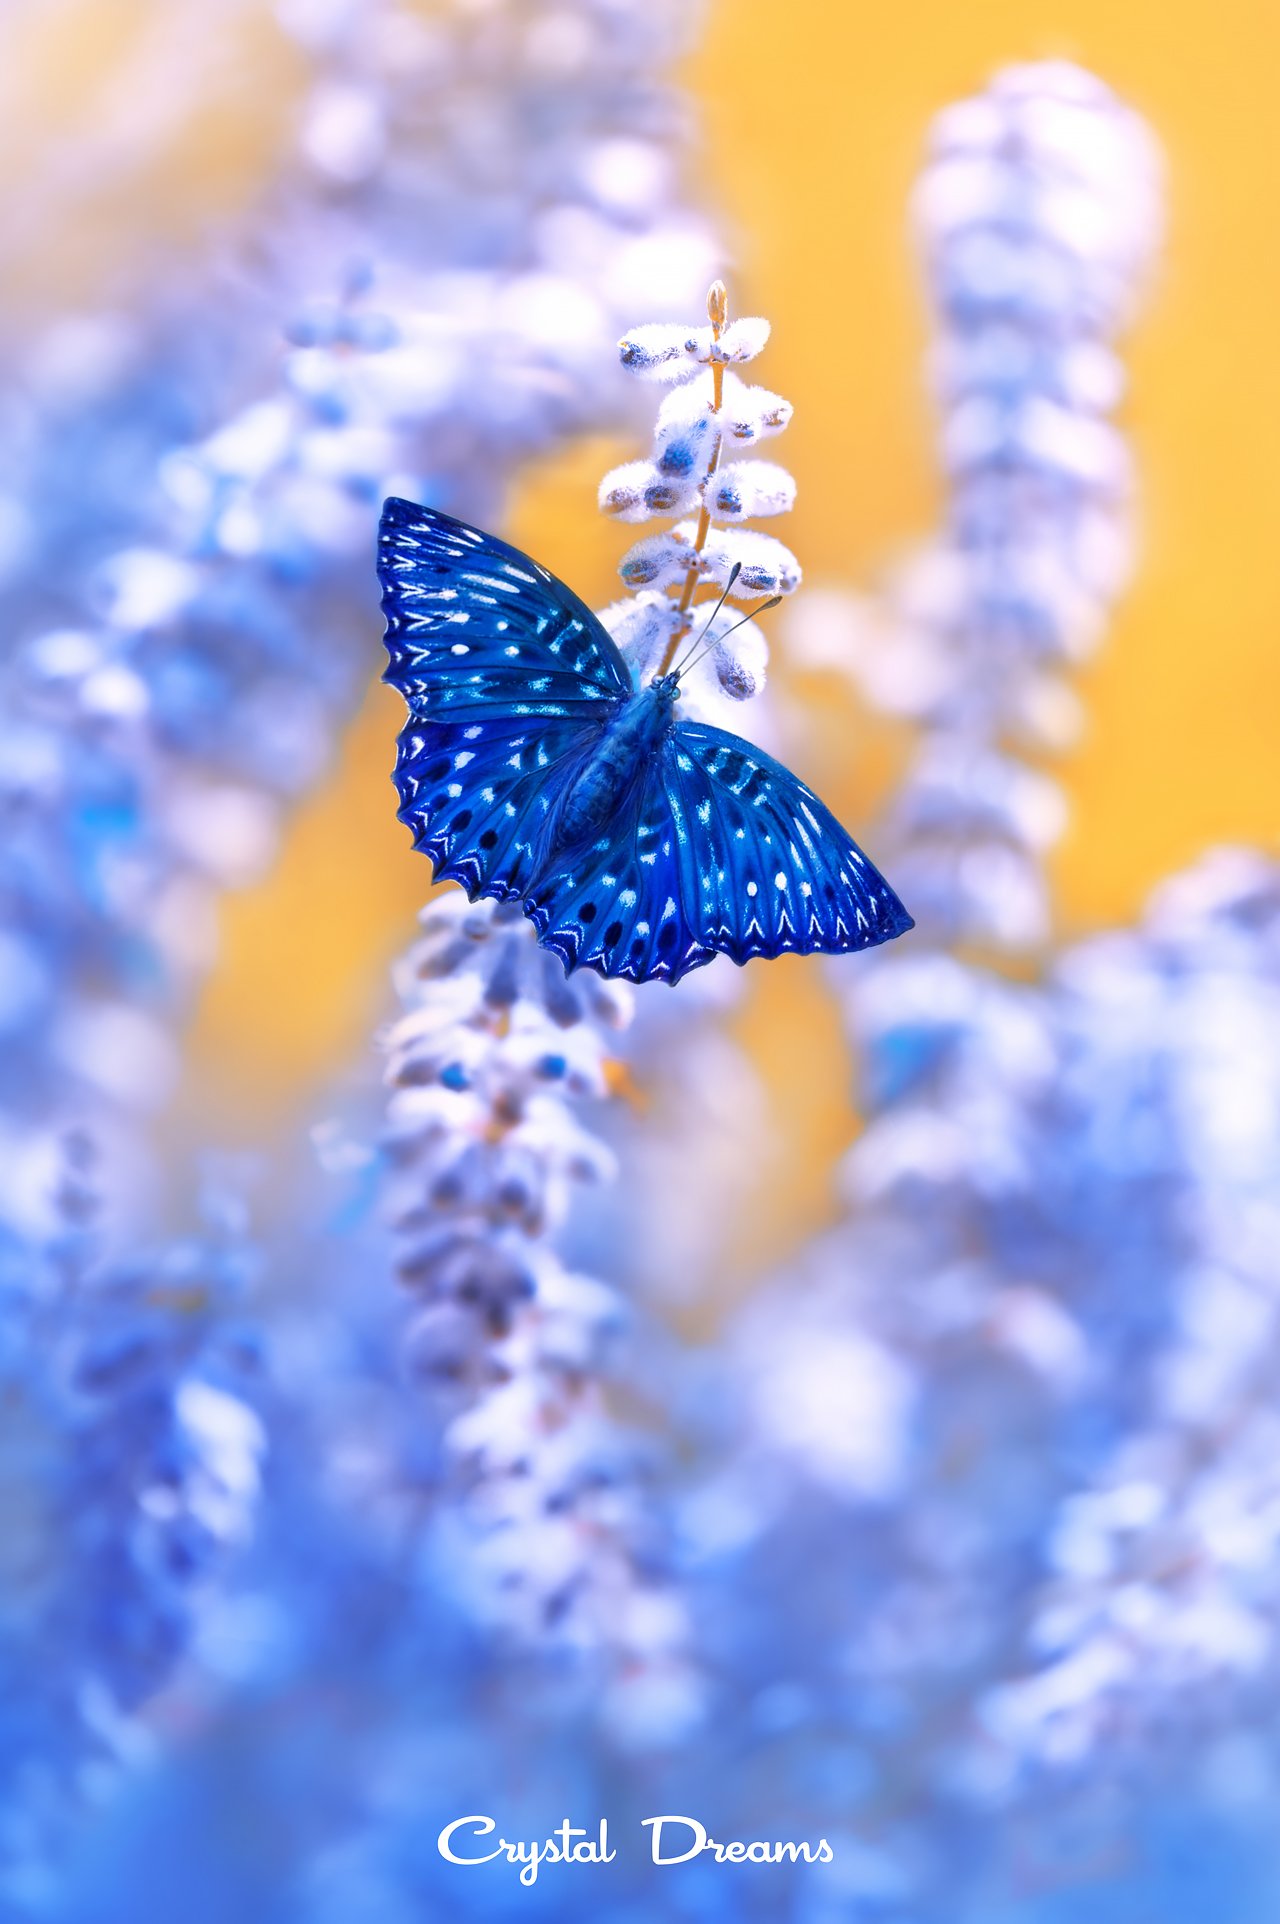 Autumn, Butterfly, Color, Crystal Dreams, Flowers, Light, Magic, Nature, Shadow, Татьяна Крылова